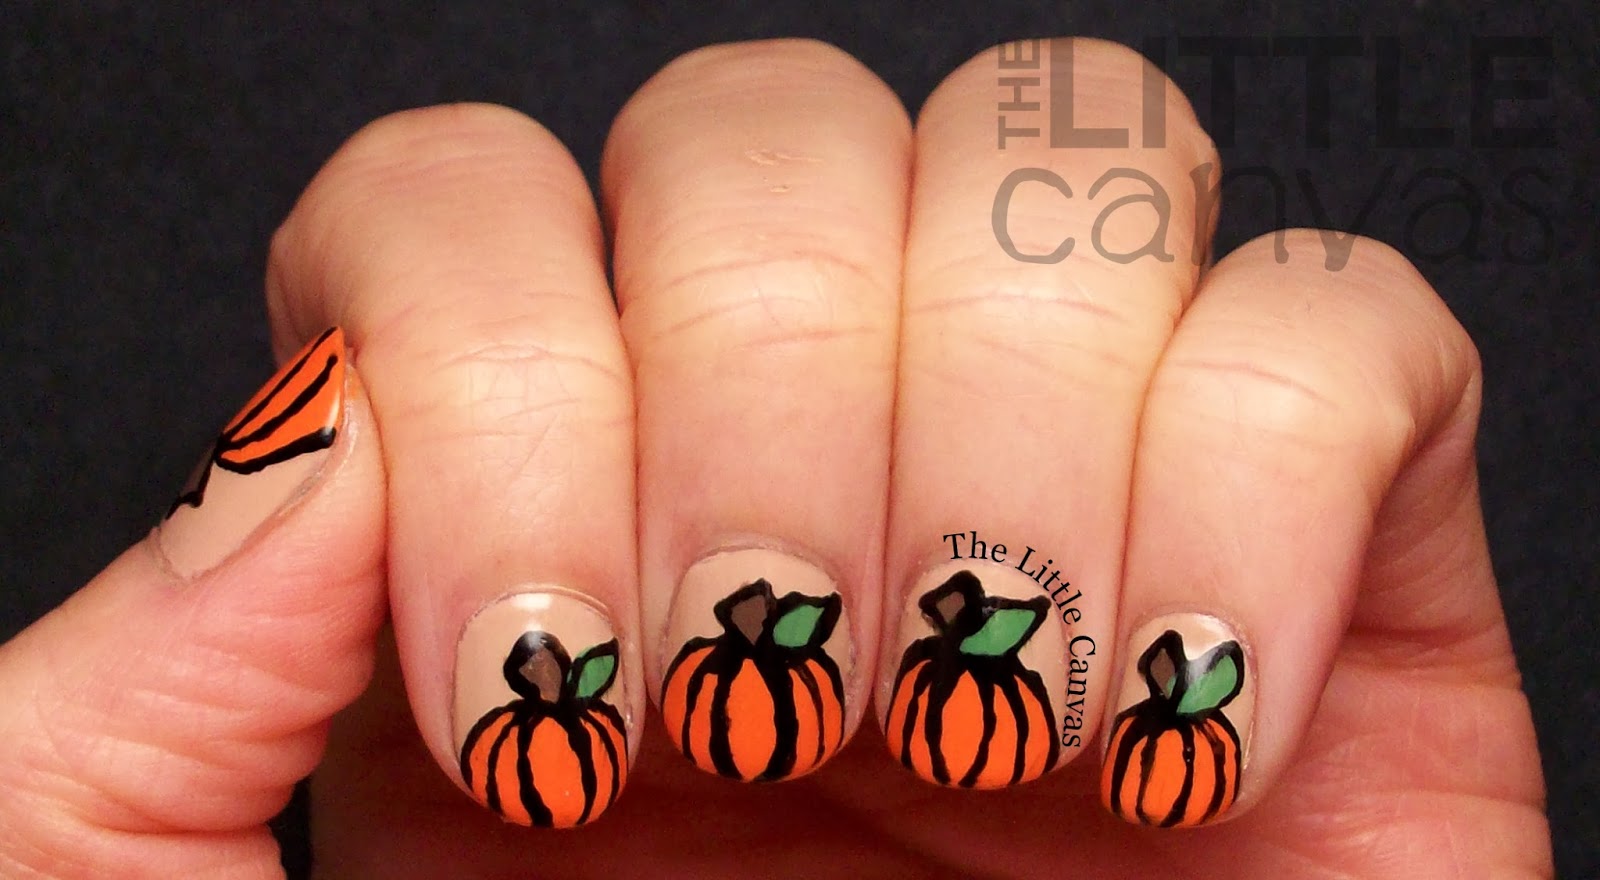 2. "Halloween Nail Art with Bats and Pumpkins" - wide 1